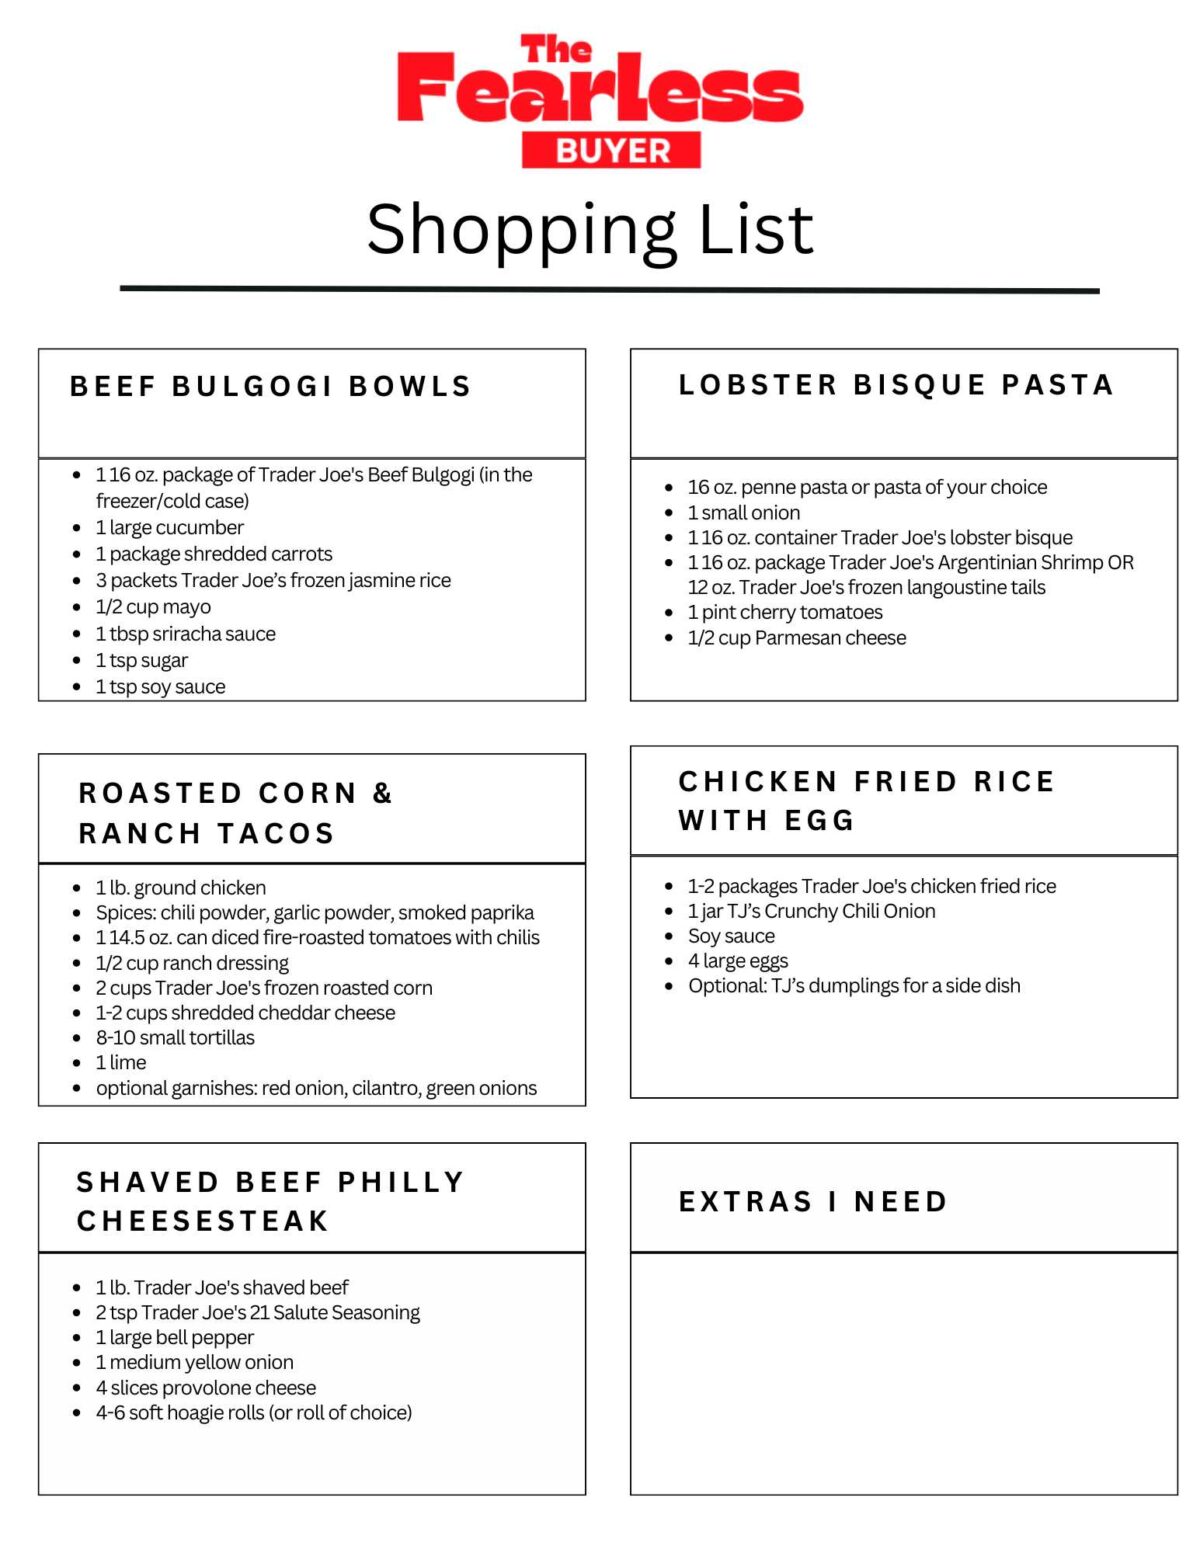 Shopping list for Trader Joe's Meal Plan 7.